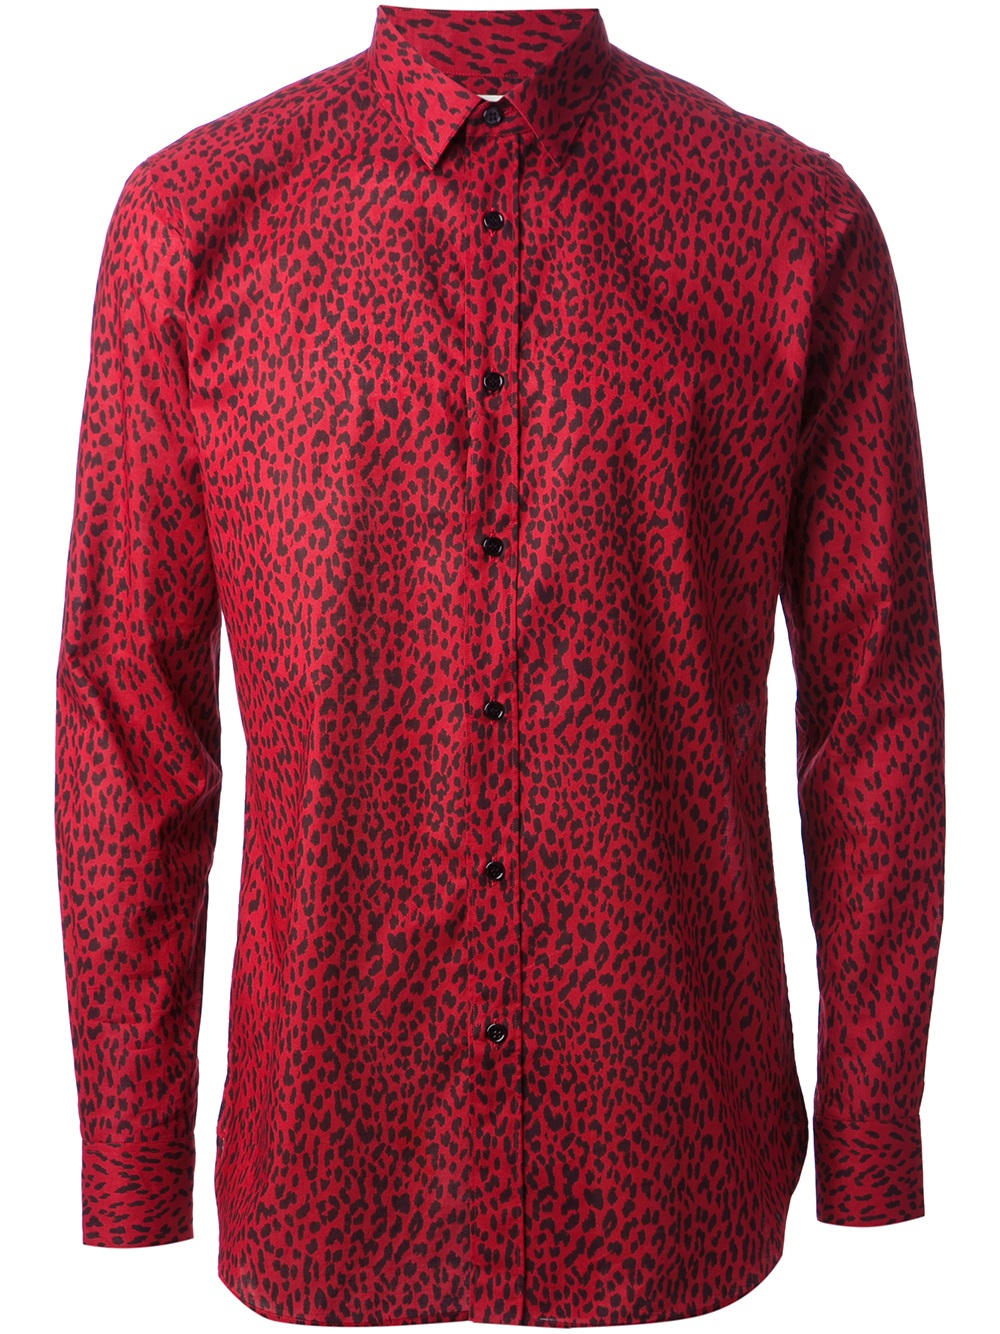 Lyst - Saint Laurent Leopard Print Shirt in Red for Men